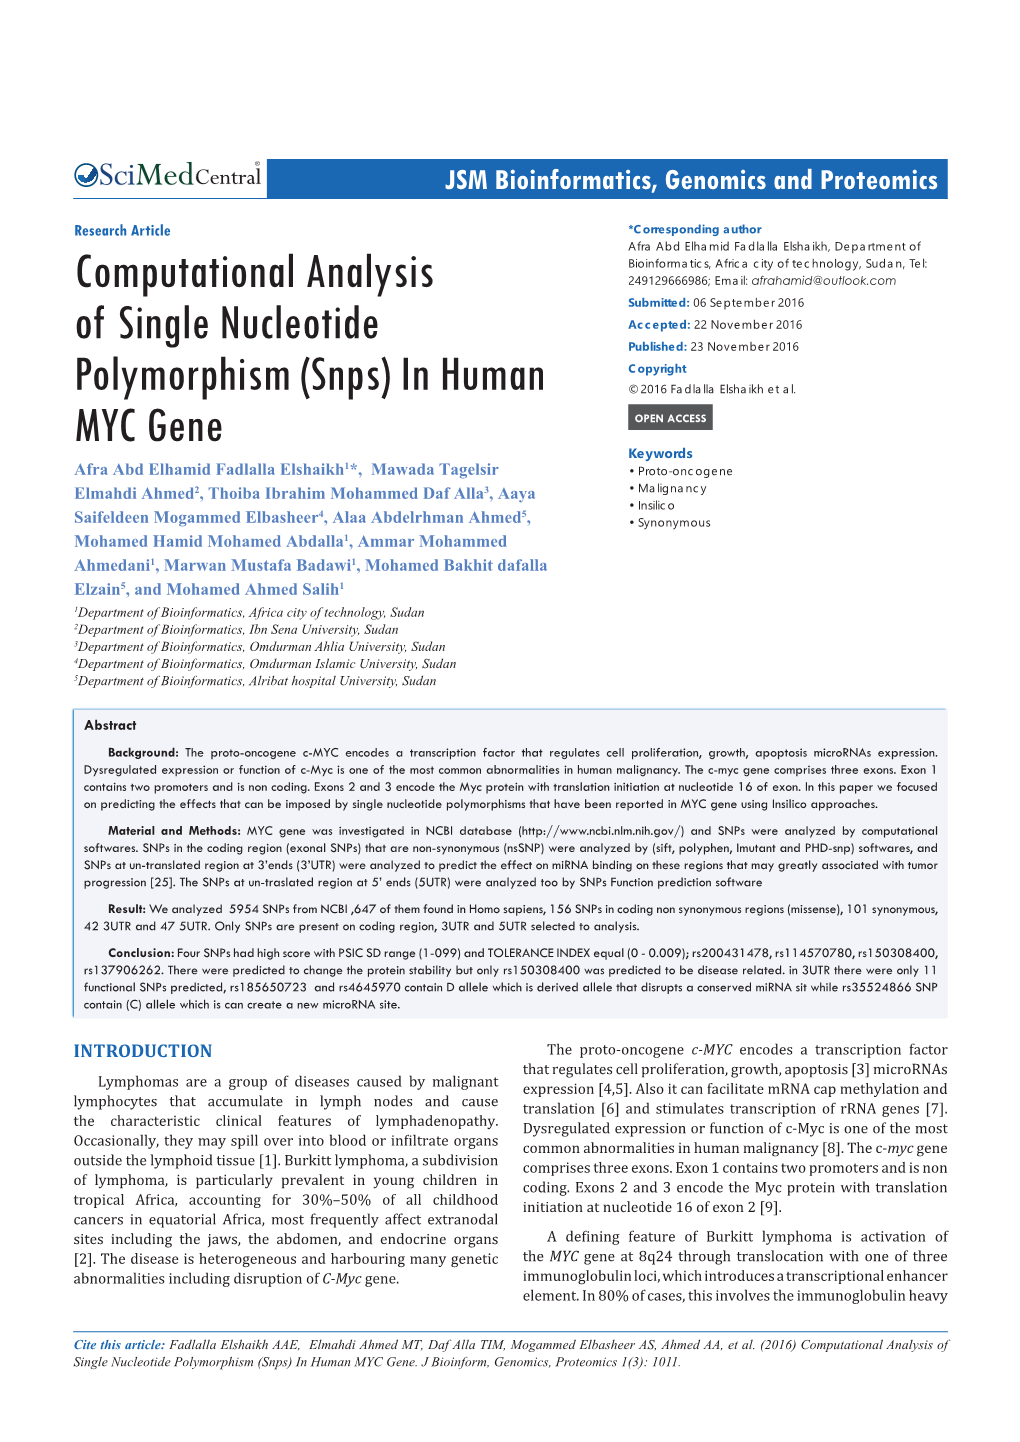 Computational Analysis of Single Nucleotide Polymorphism (Snps) in Human MYC Gene